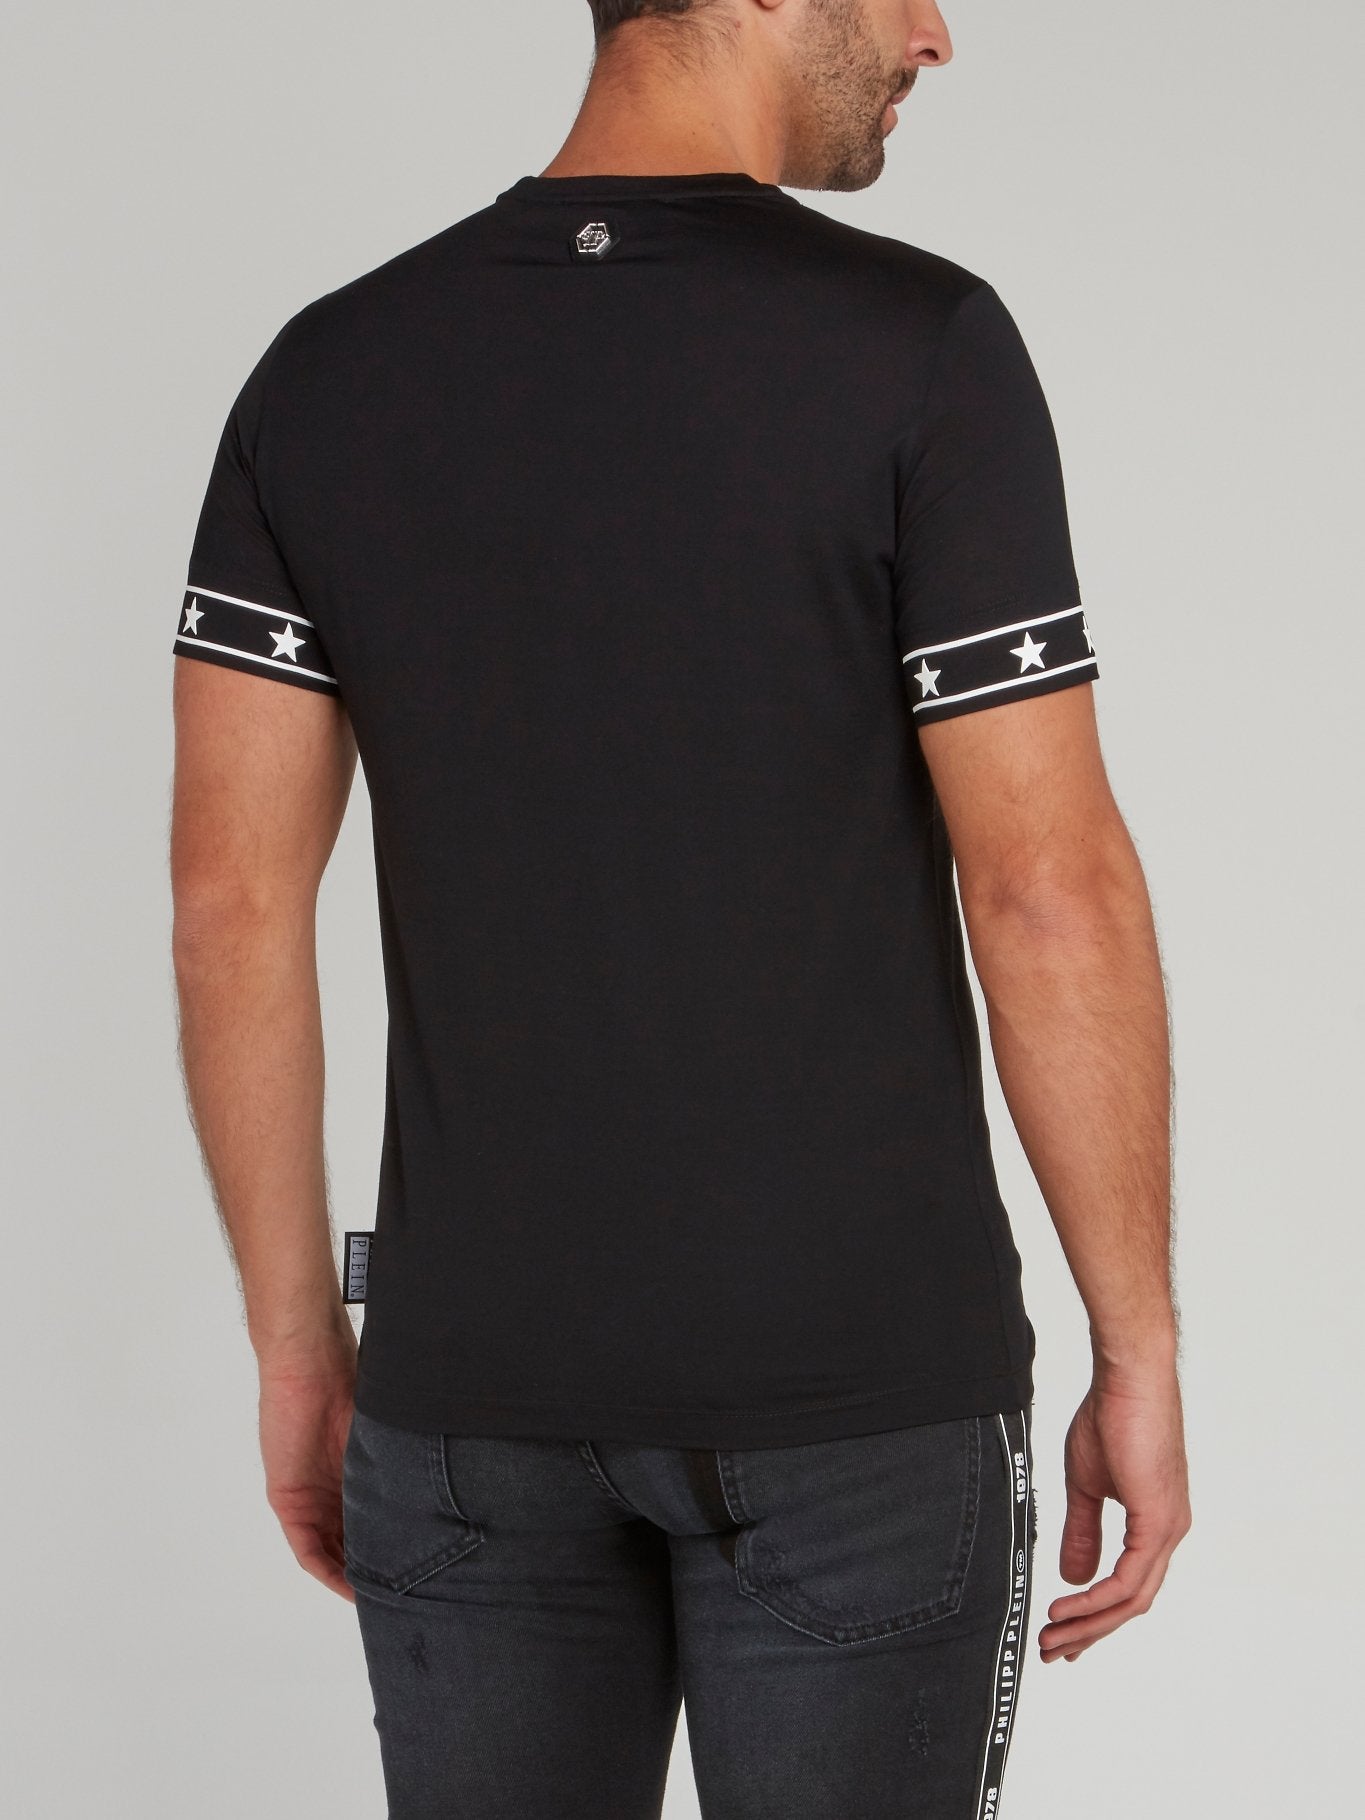 Черная футболка со звездами на рукавах PP1978